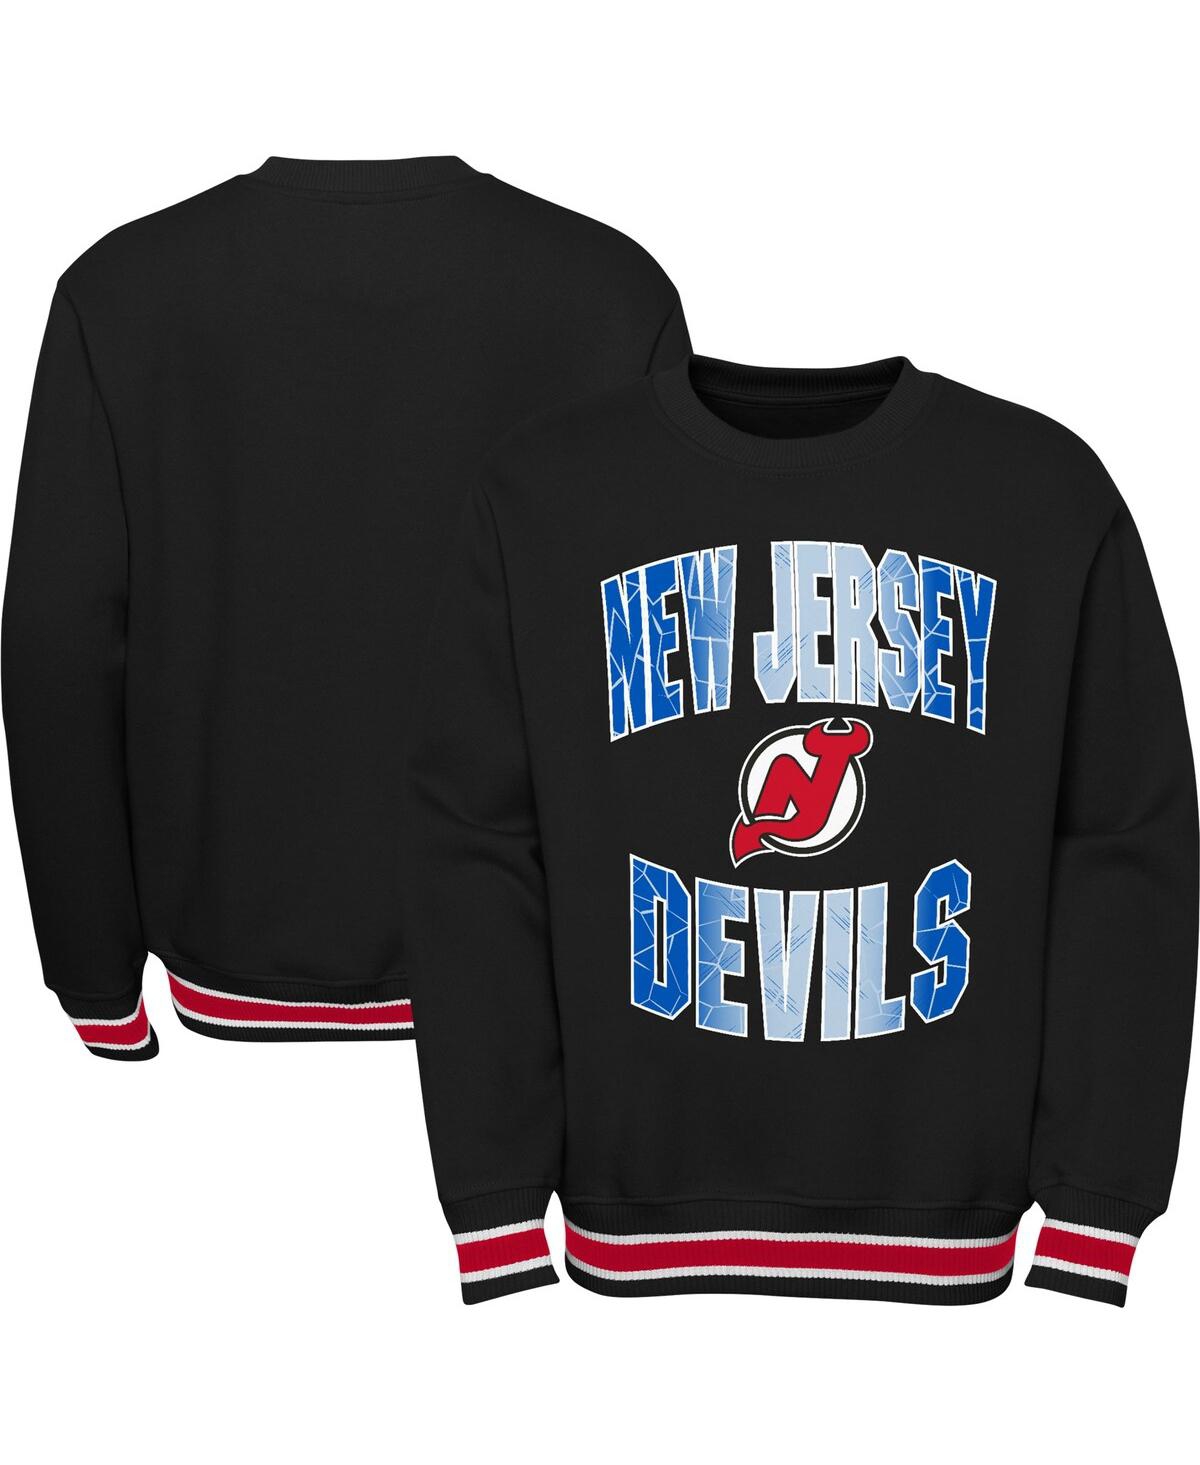 Outerstuff Kids' Big Boys And Girls Black New Jersey Devils Classic Blueliner Pullover Sweatshirt